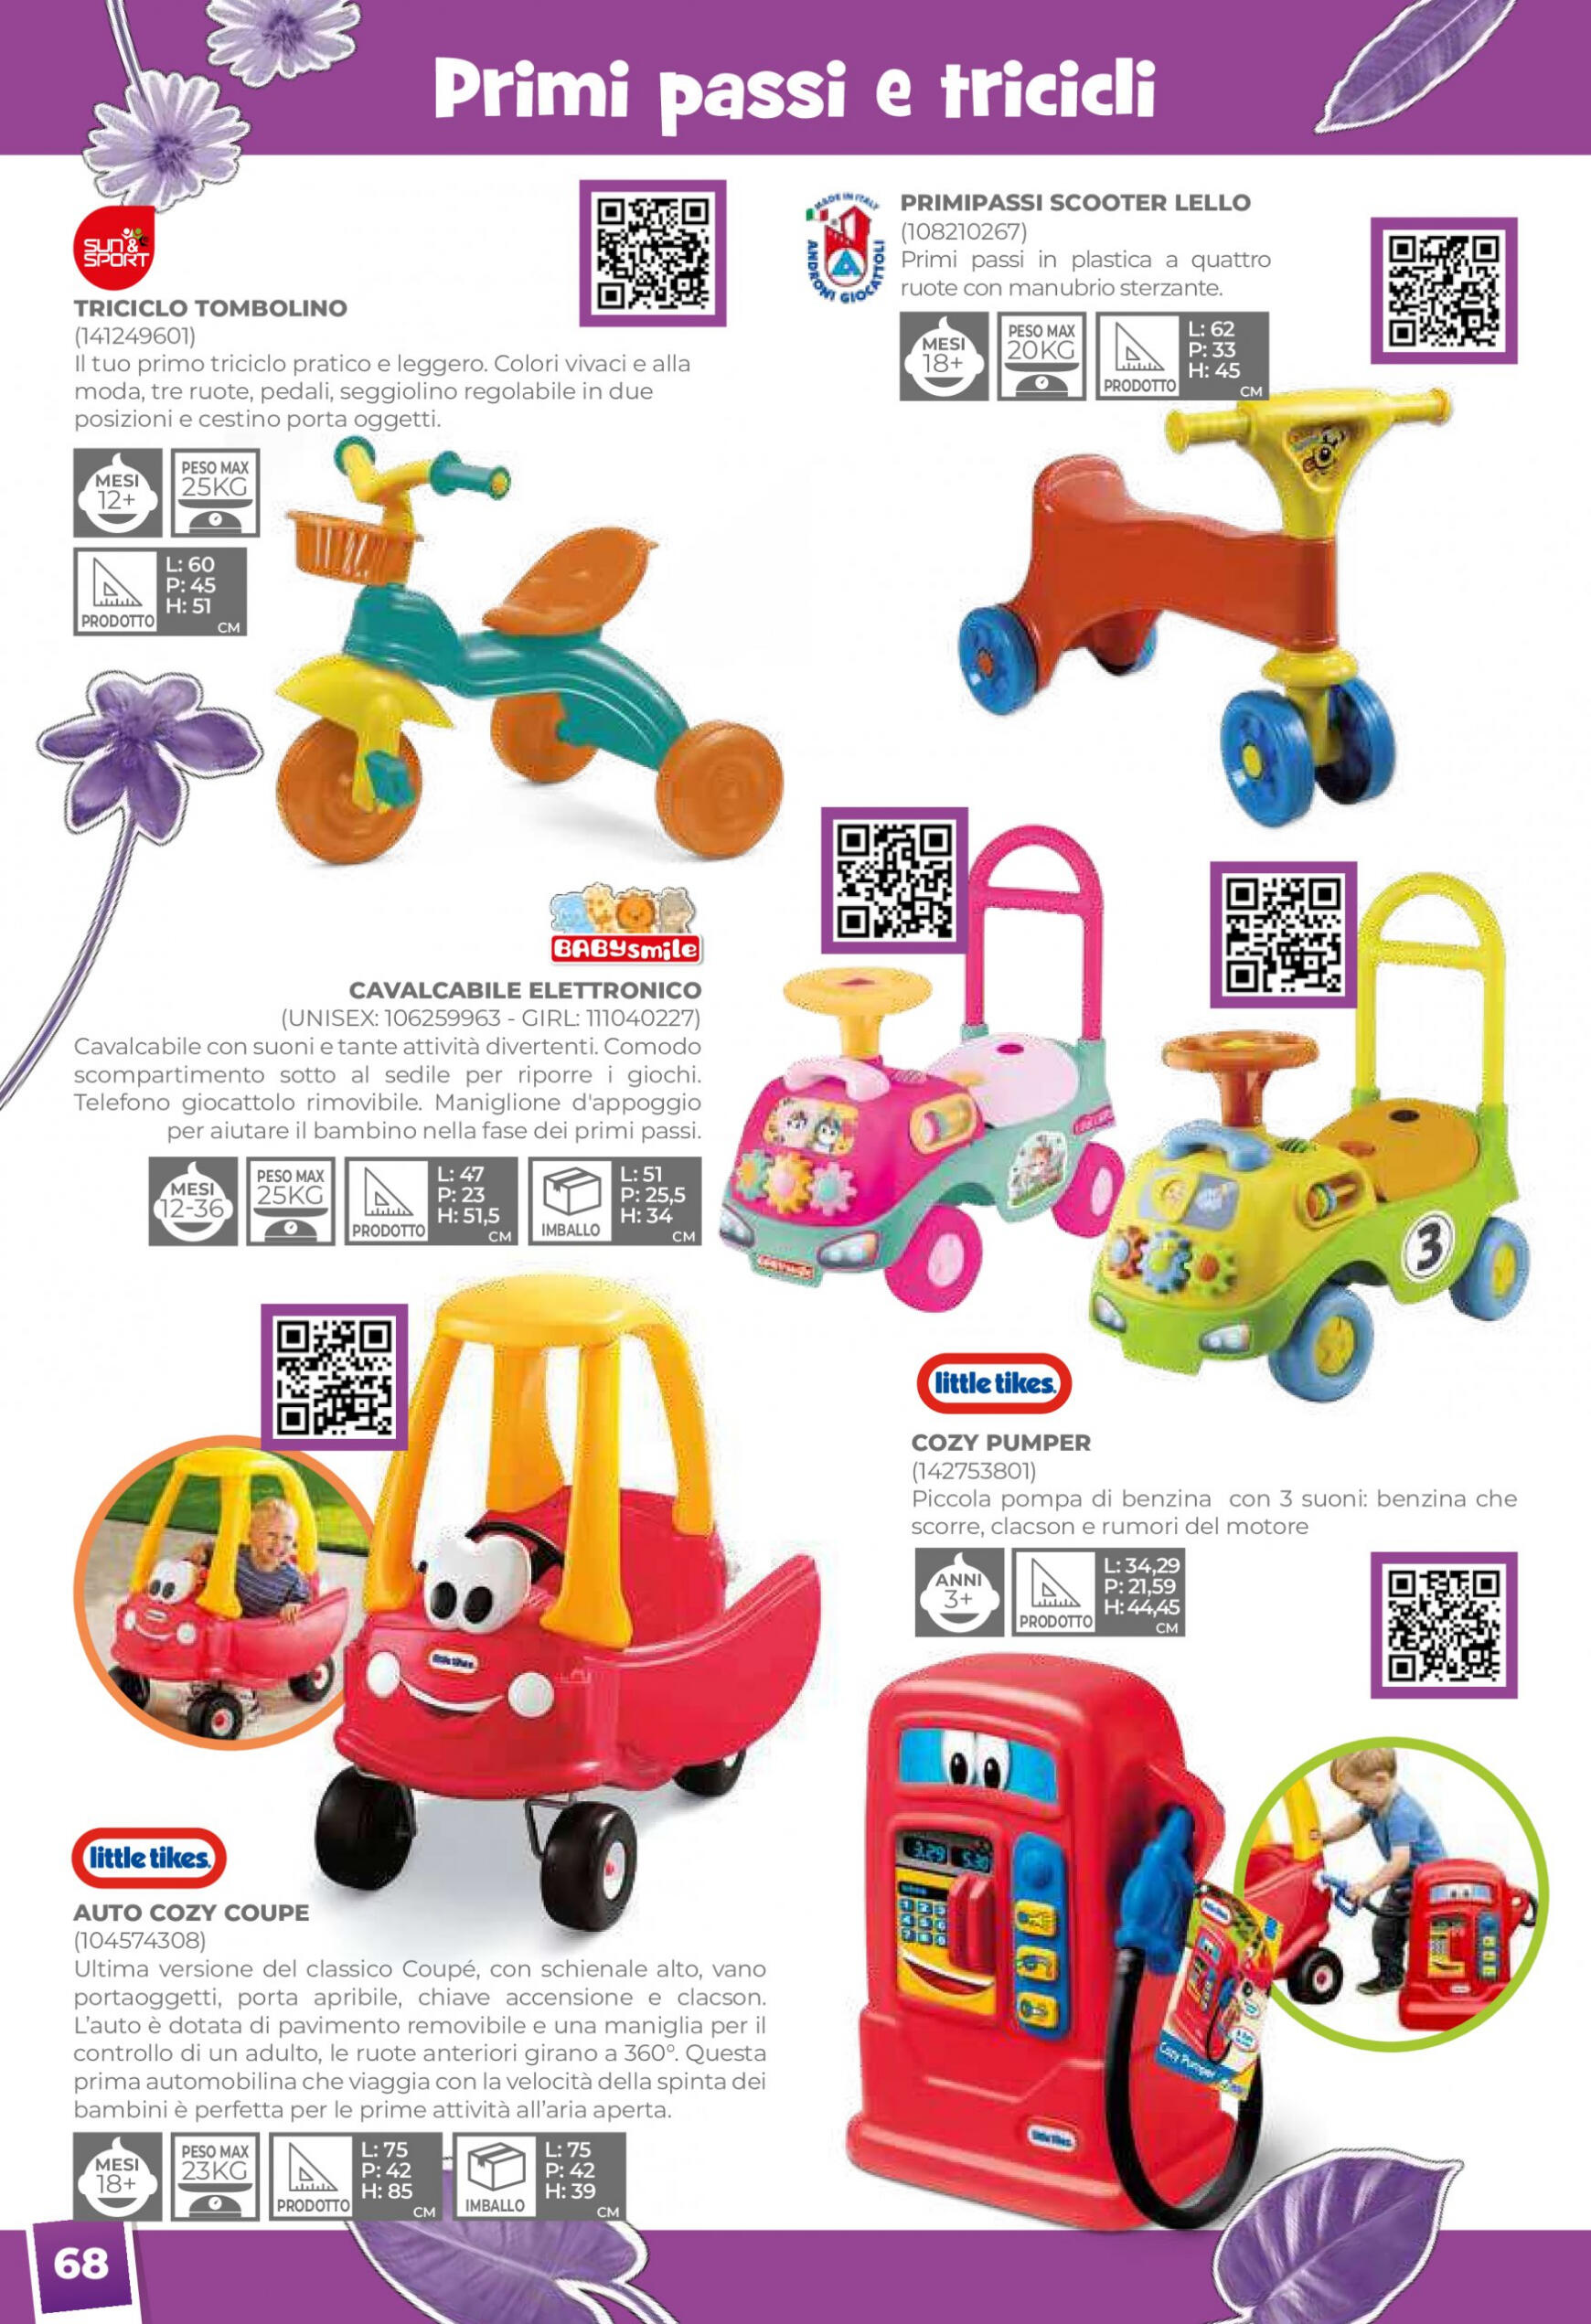 toys-center - Nuovo volantino Toys Center 01.05. - 31.12. - page: 70